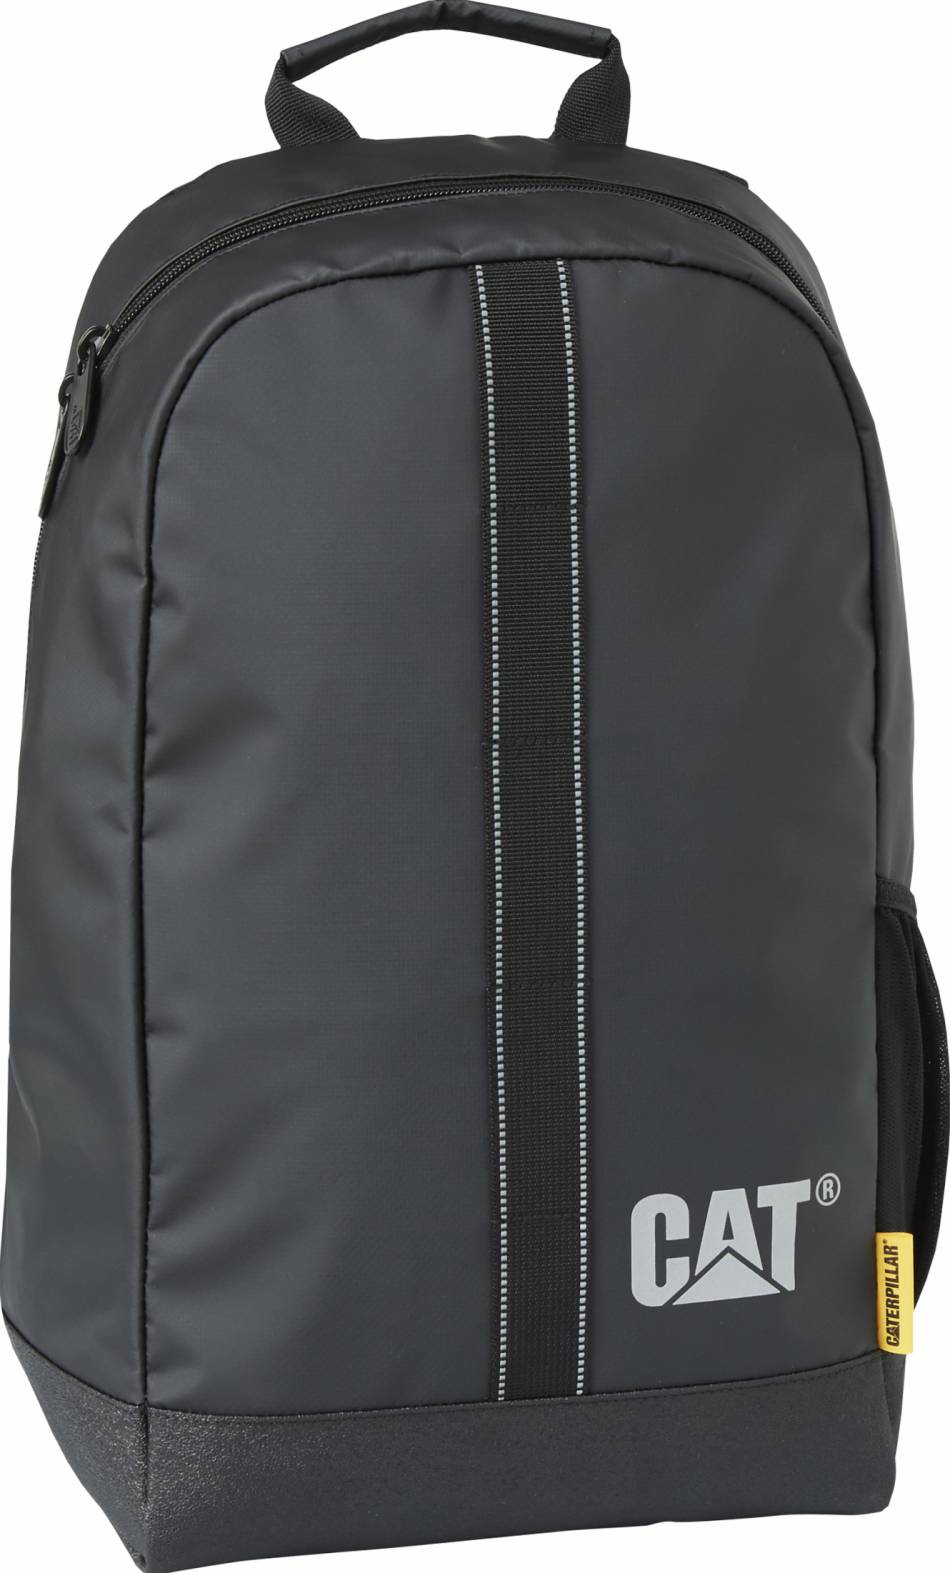 Cat - Zion Backpack - Black